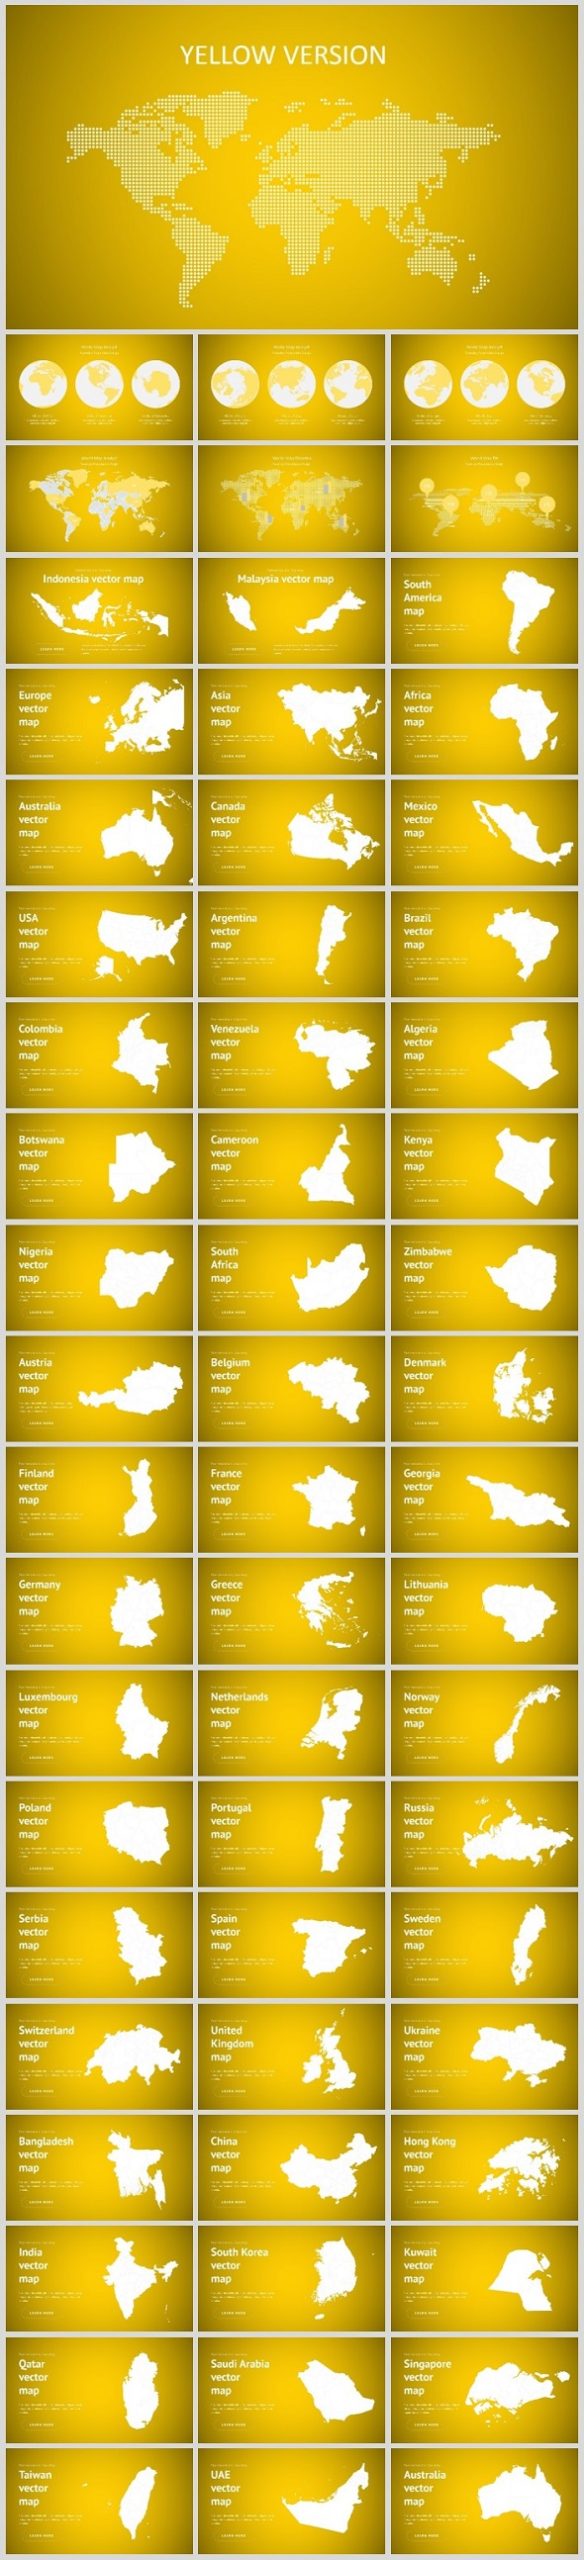 04-Maps-Yellow